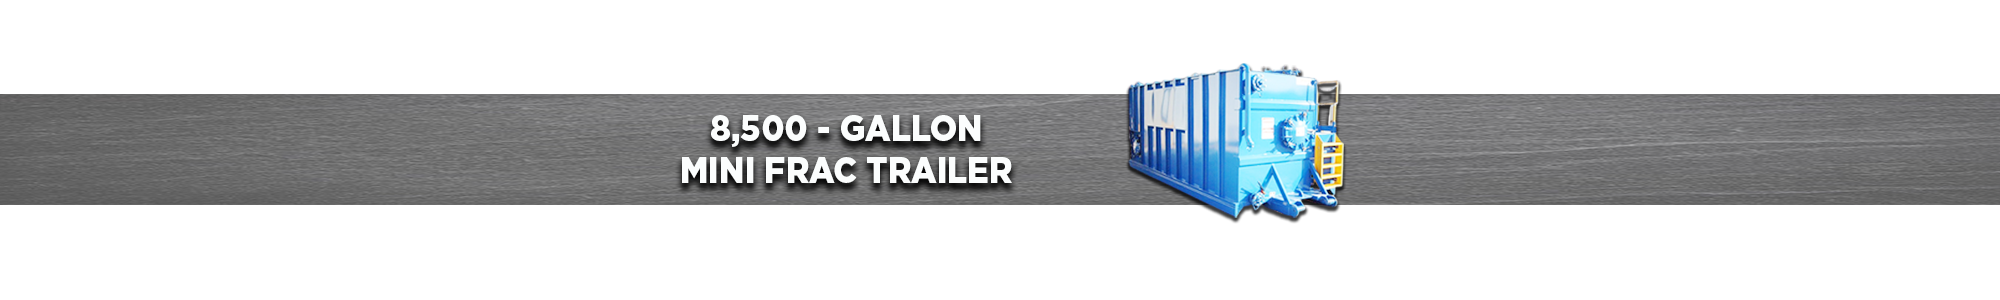 8,500-Gallon Mini Frac Trailer